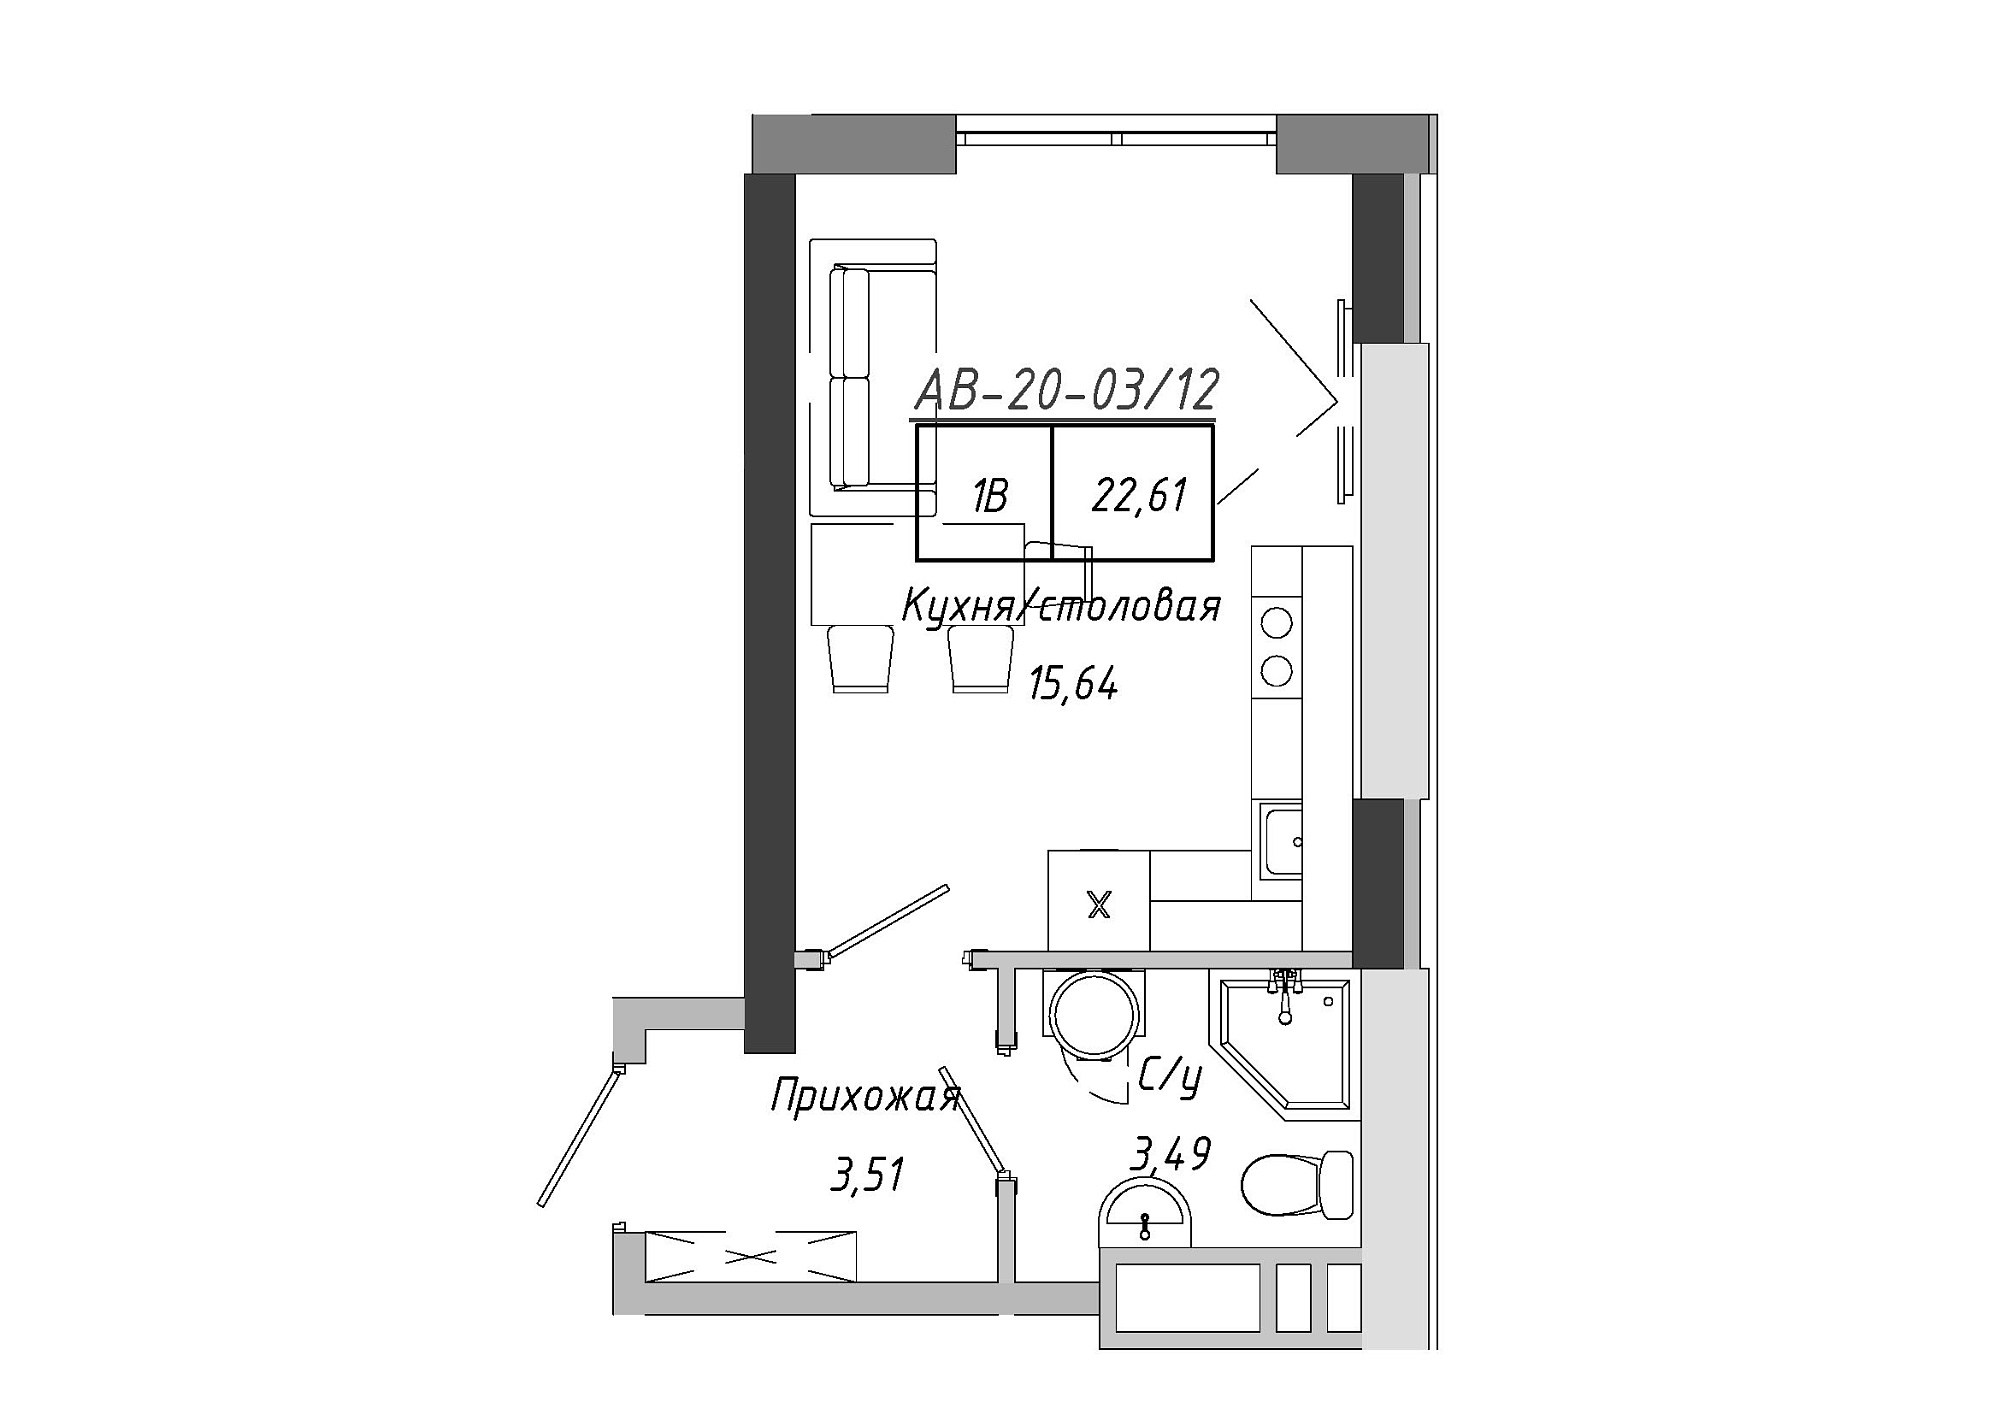 Планировка Smart-квартира площей 22.61м2, AB-20-03/00012.